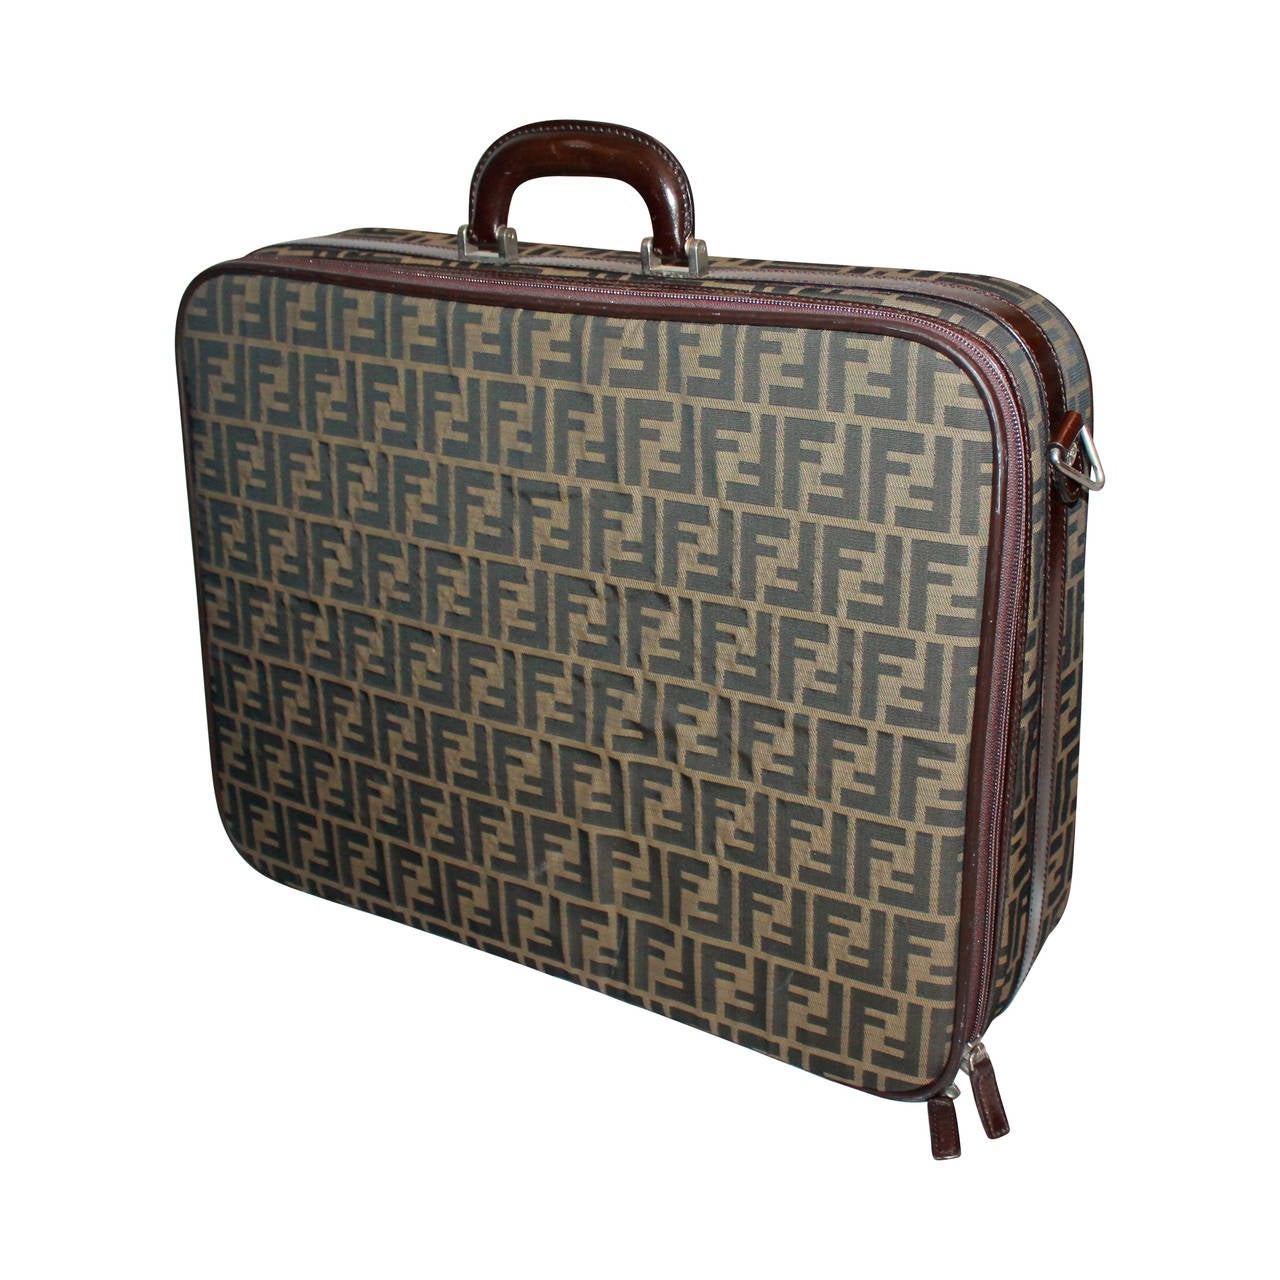 Fendi Monogram Printed Suitcase with Leather Handle & Trim